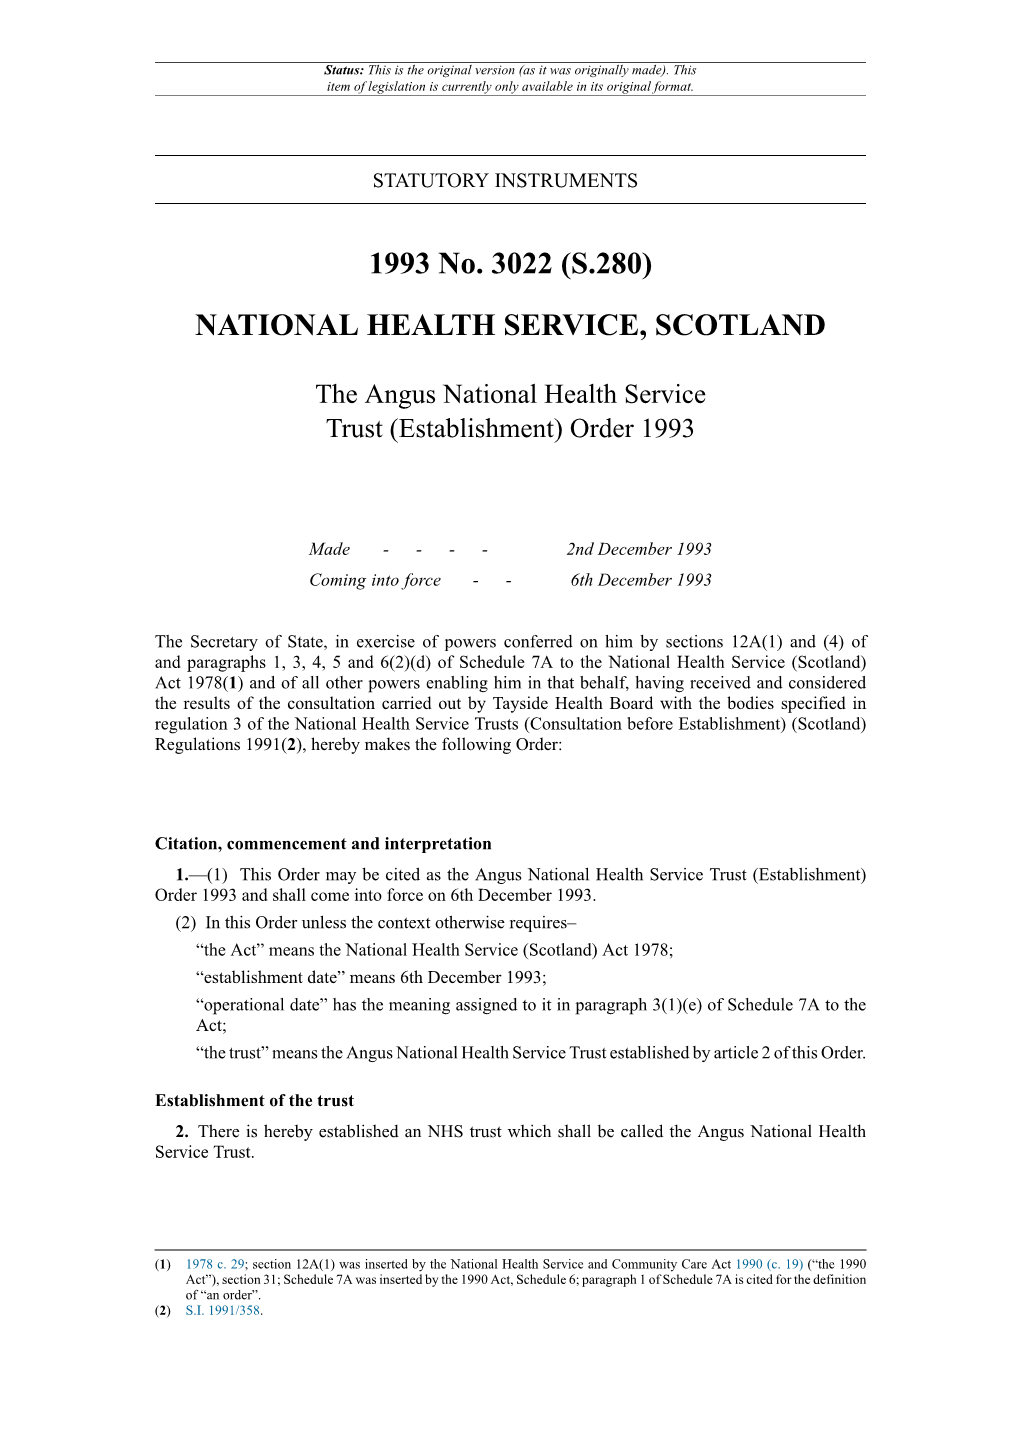 The Angus National Health Service Trust (Establishment) Order 1993